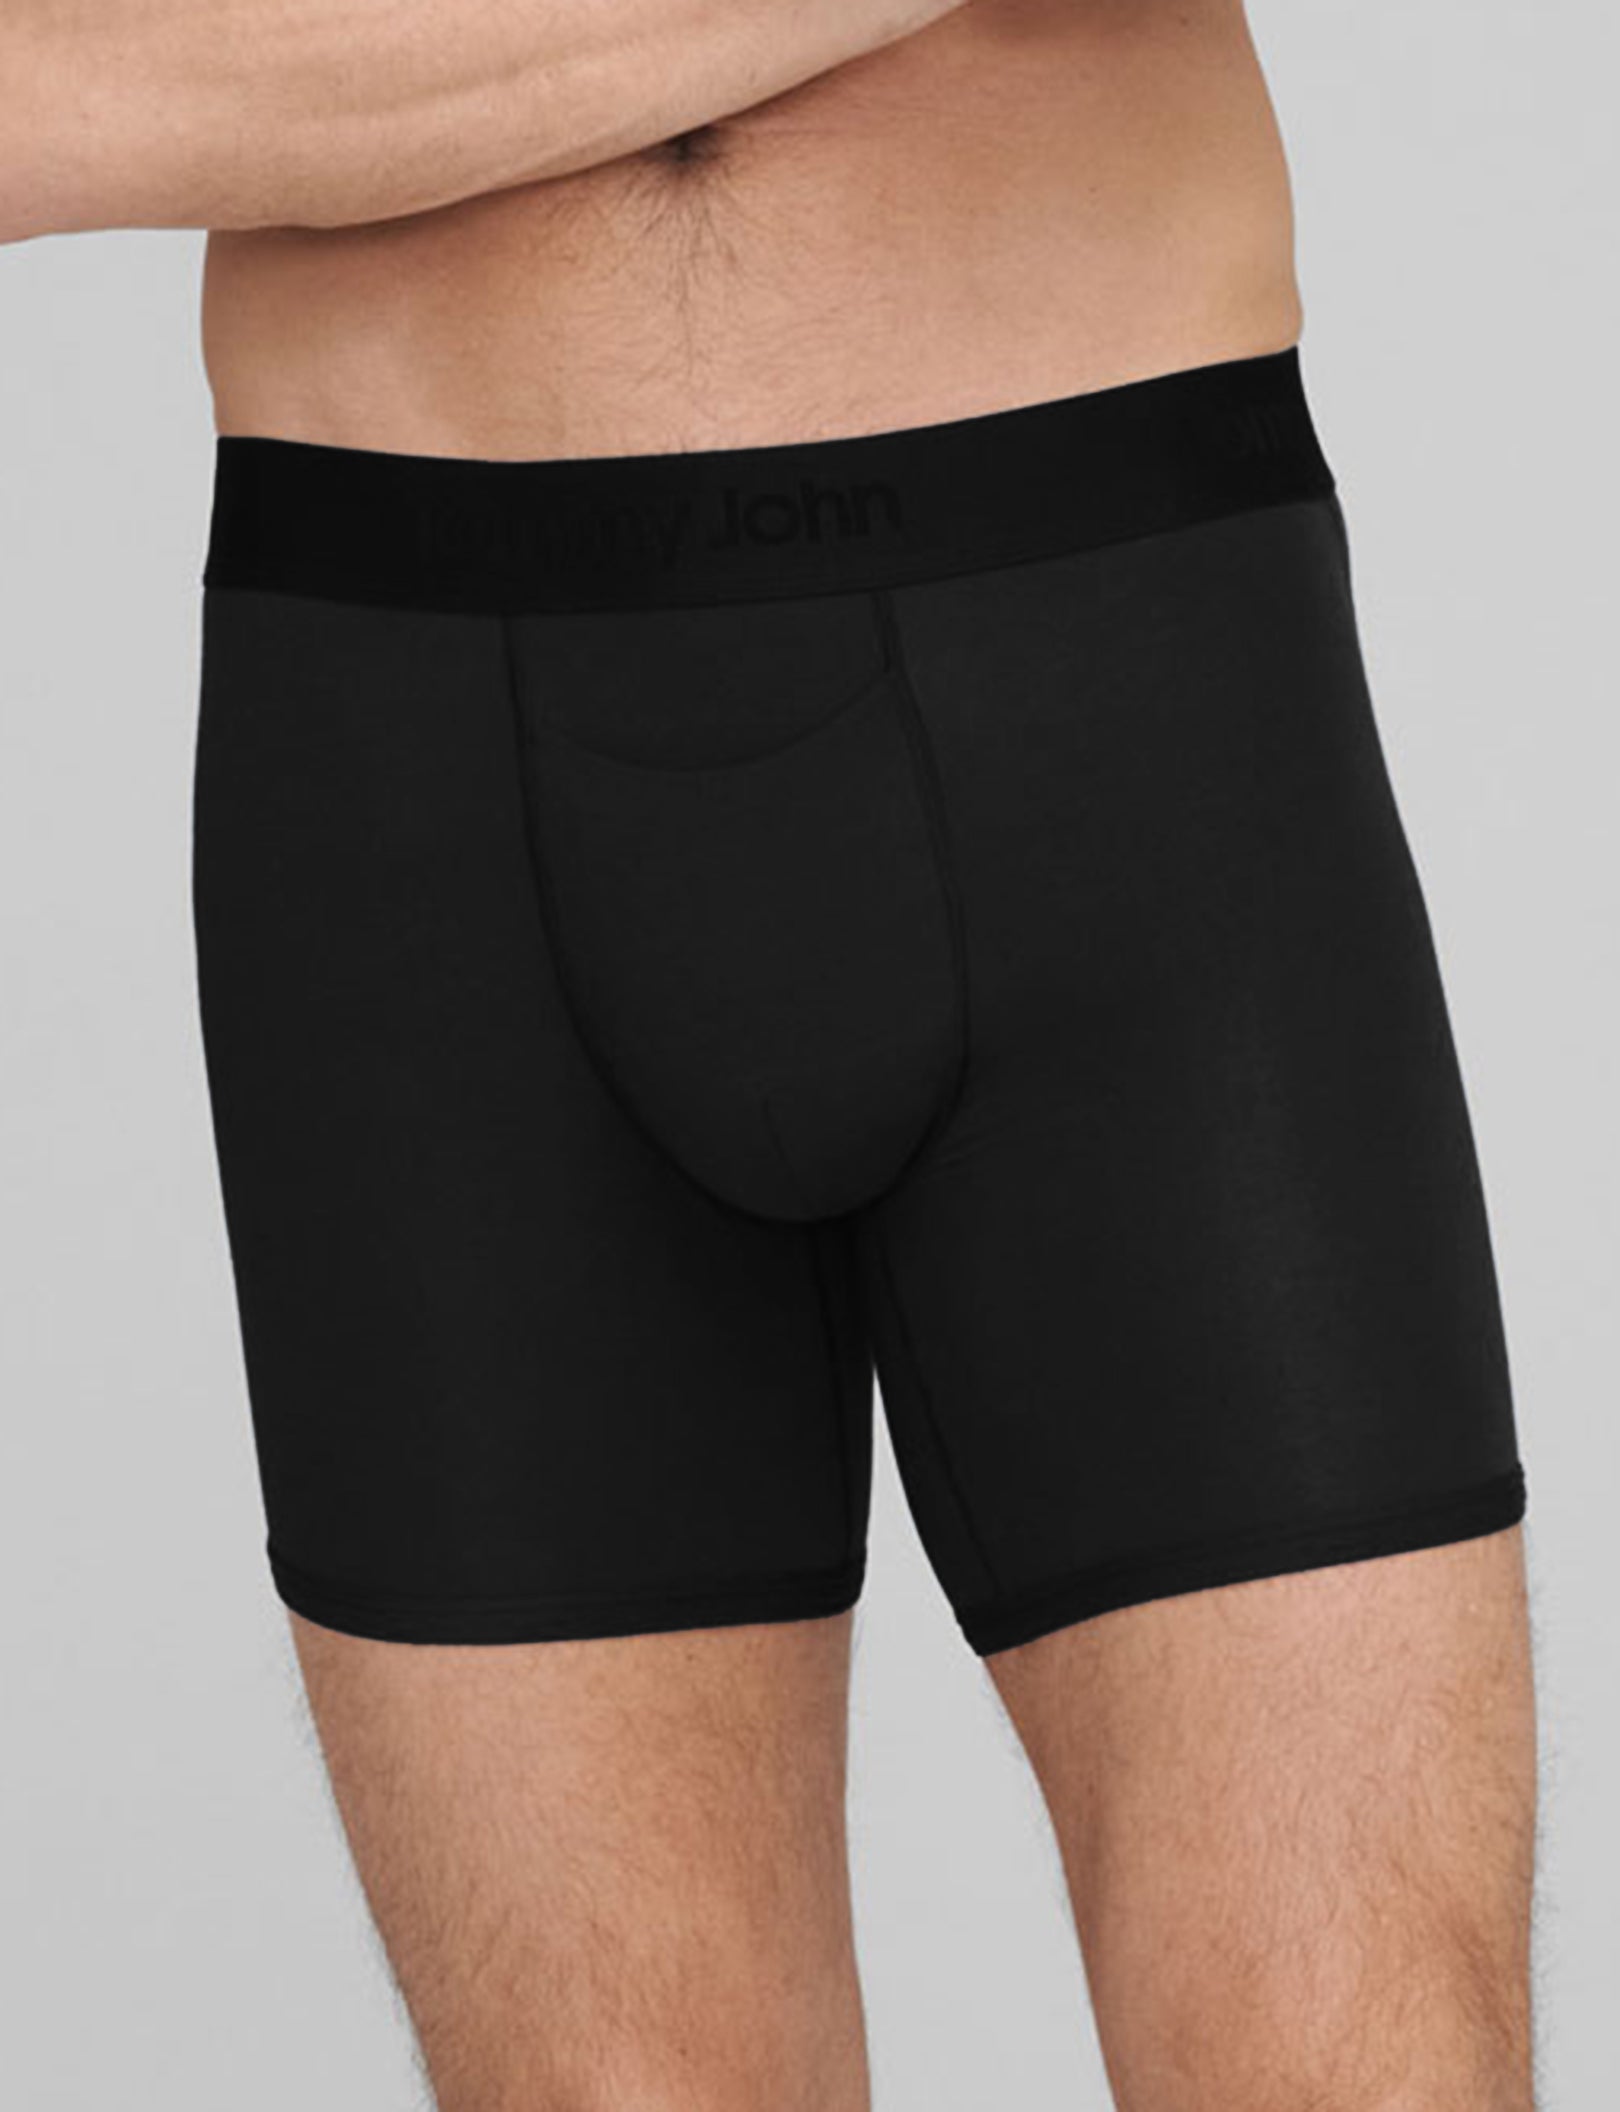 diëtz underwear on X: Black tight boxer click here